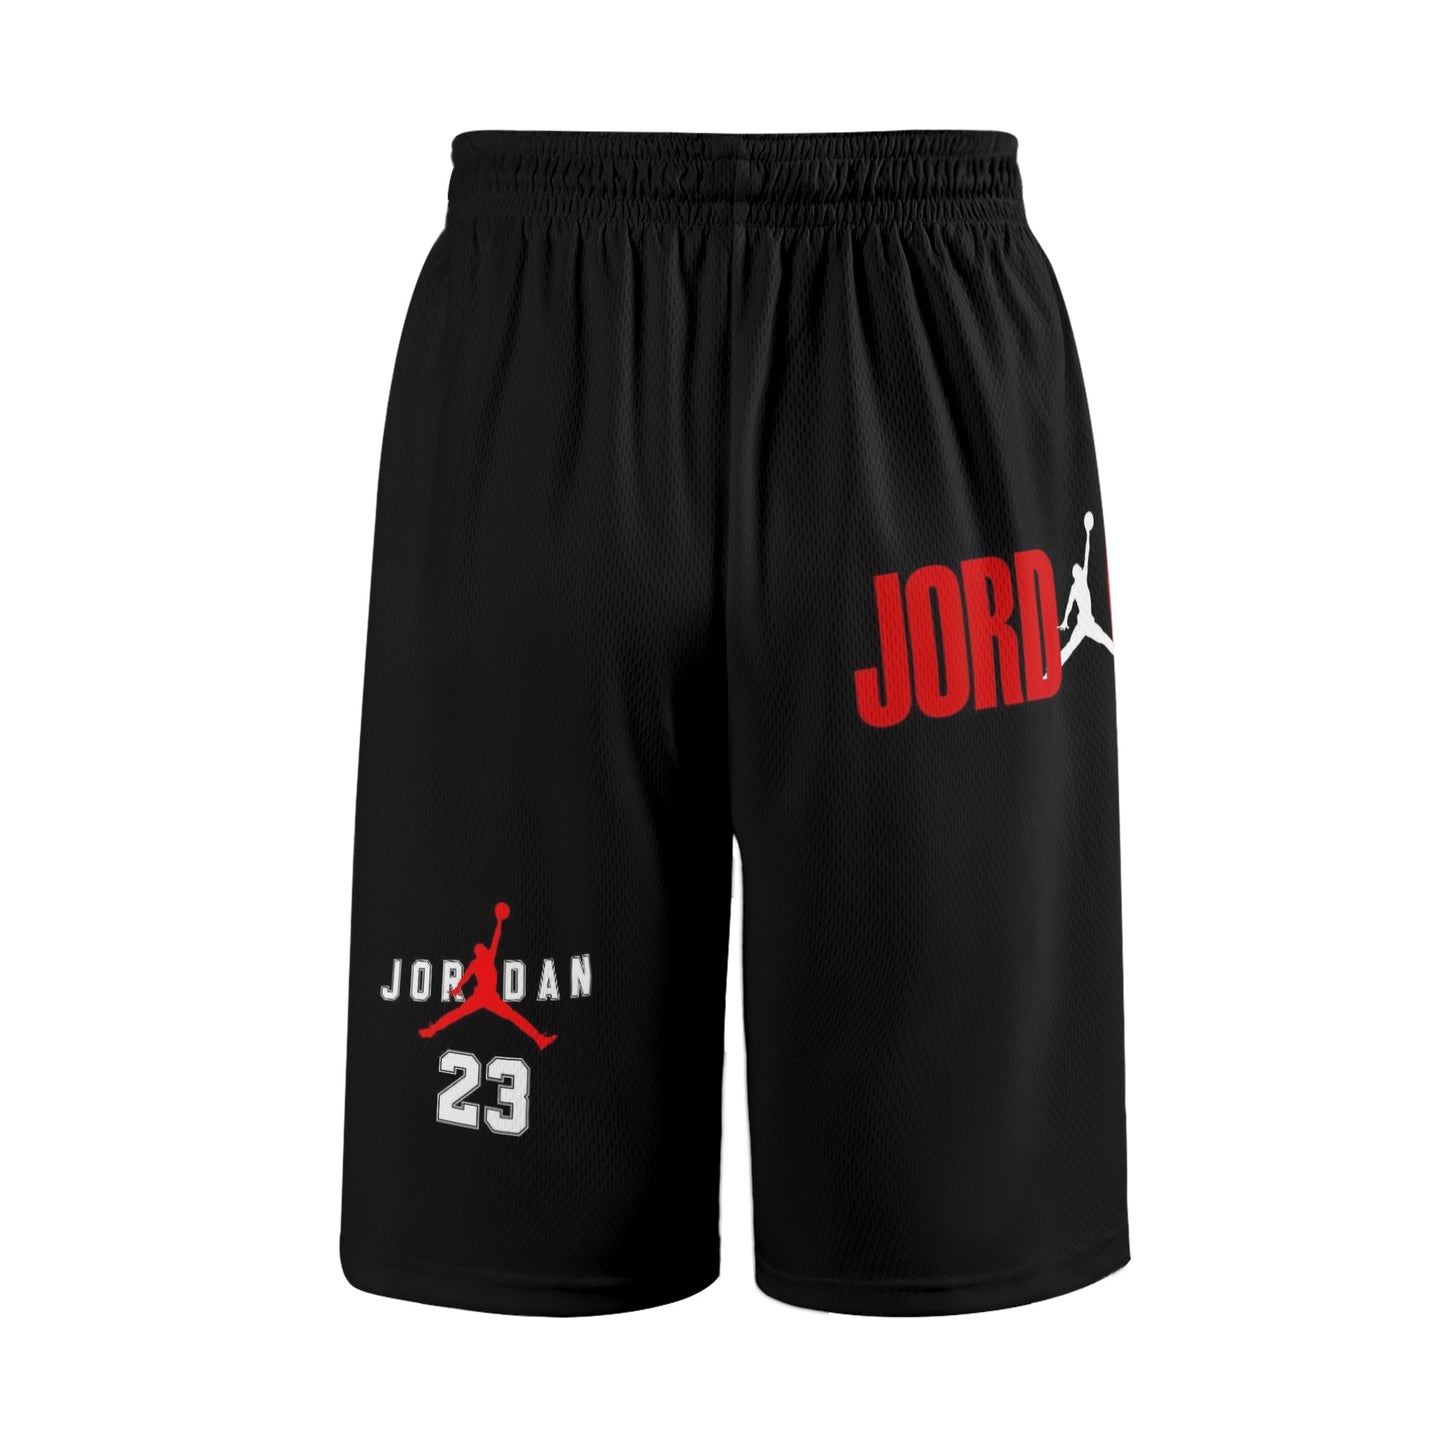 Mens Jordan Mesh Basketball Shorts & Running Short Pants